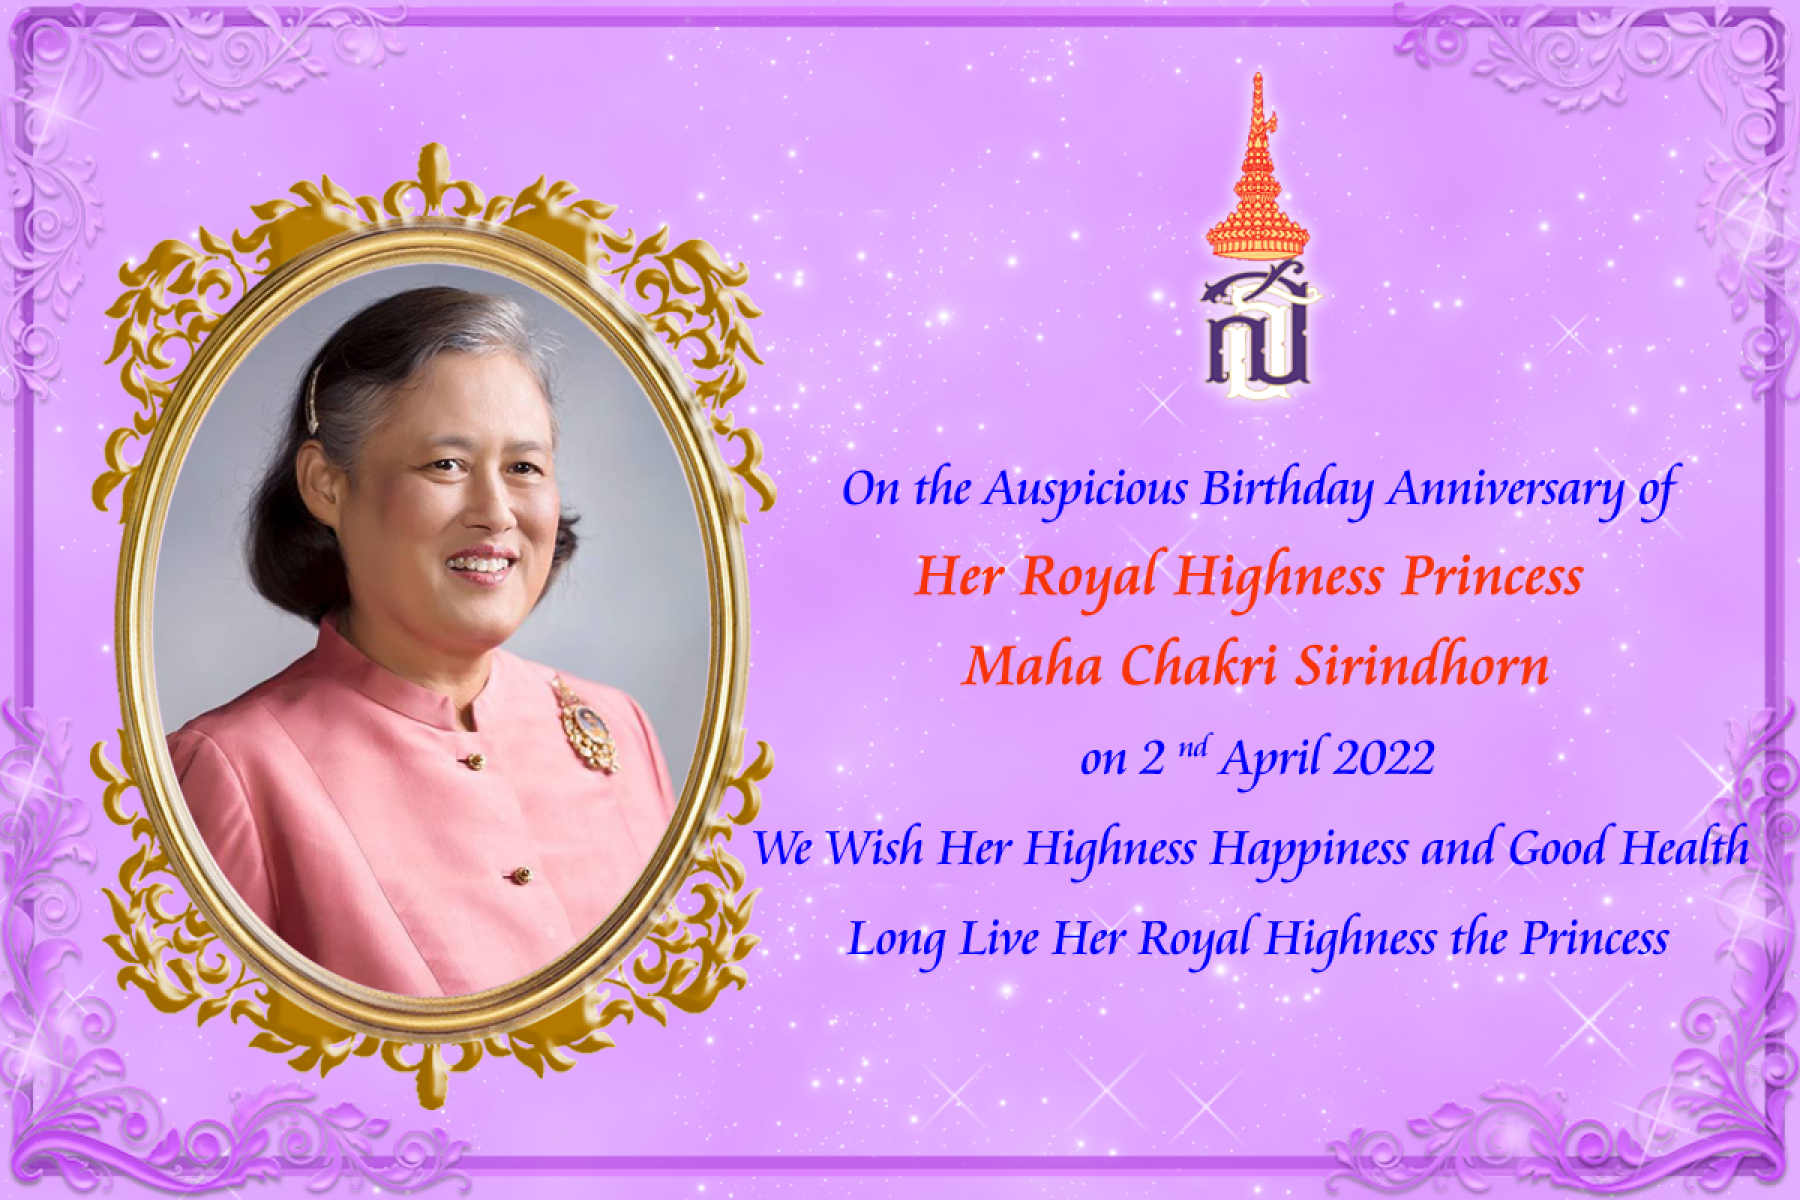 Her Royal Highness Princess Maha Chakri Sirindhorn’s Birthday